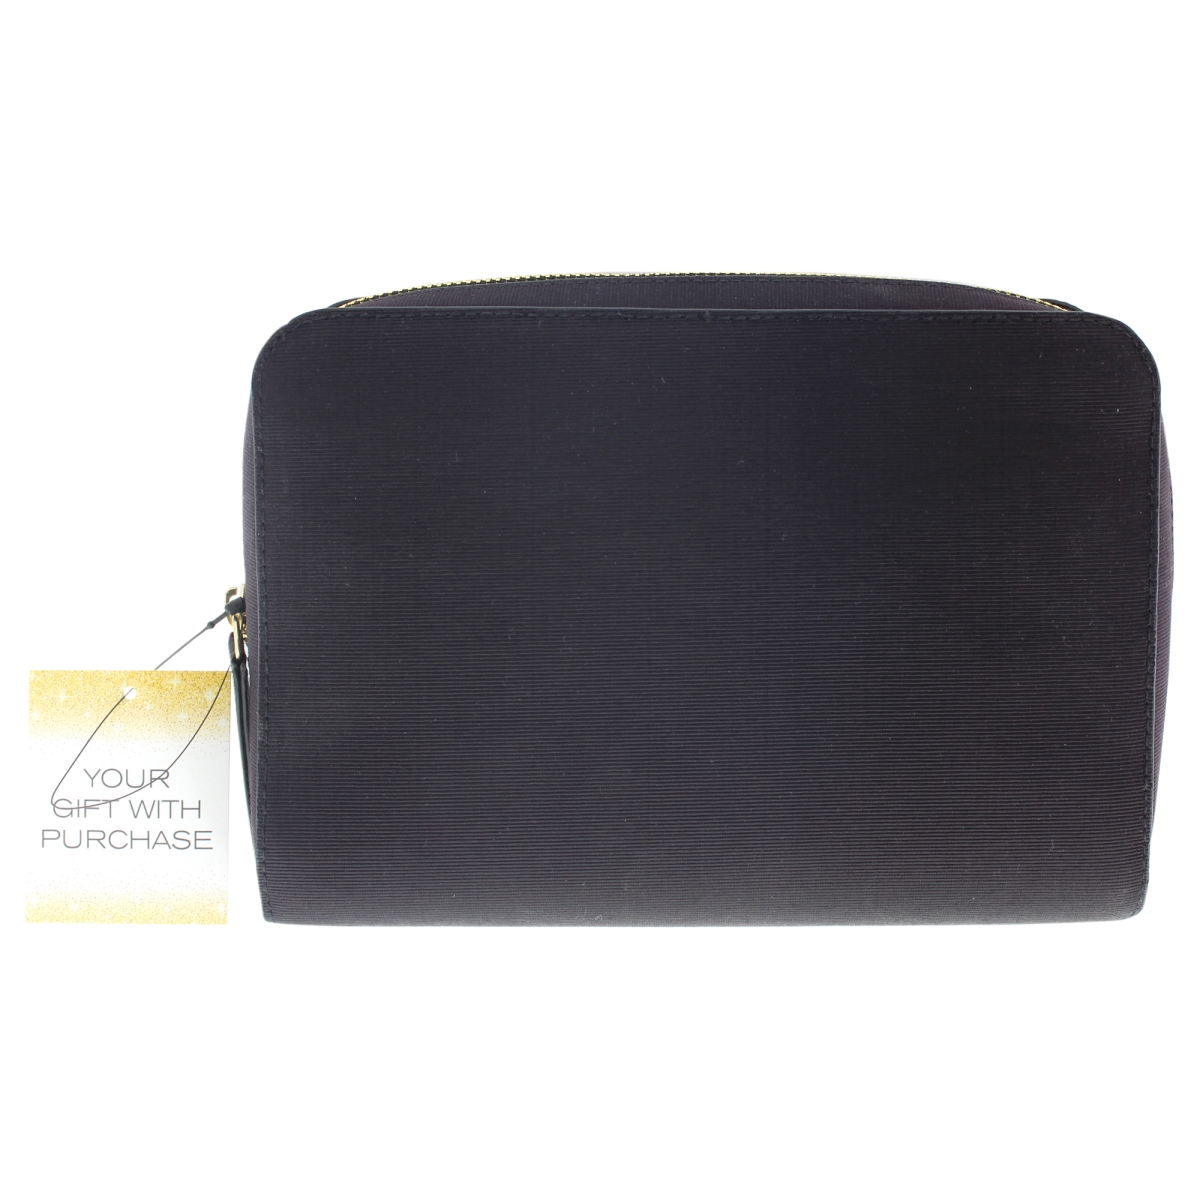 W-bg-1270 Cosmetic Bag - Black For Women